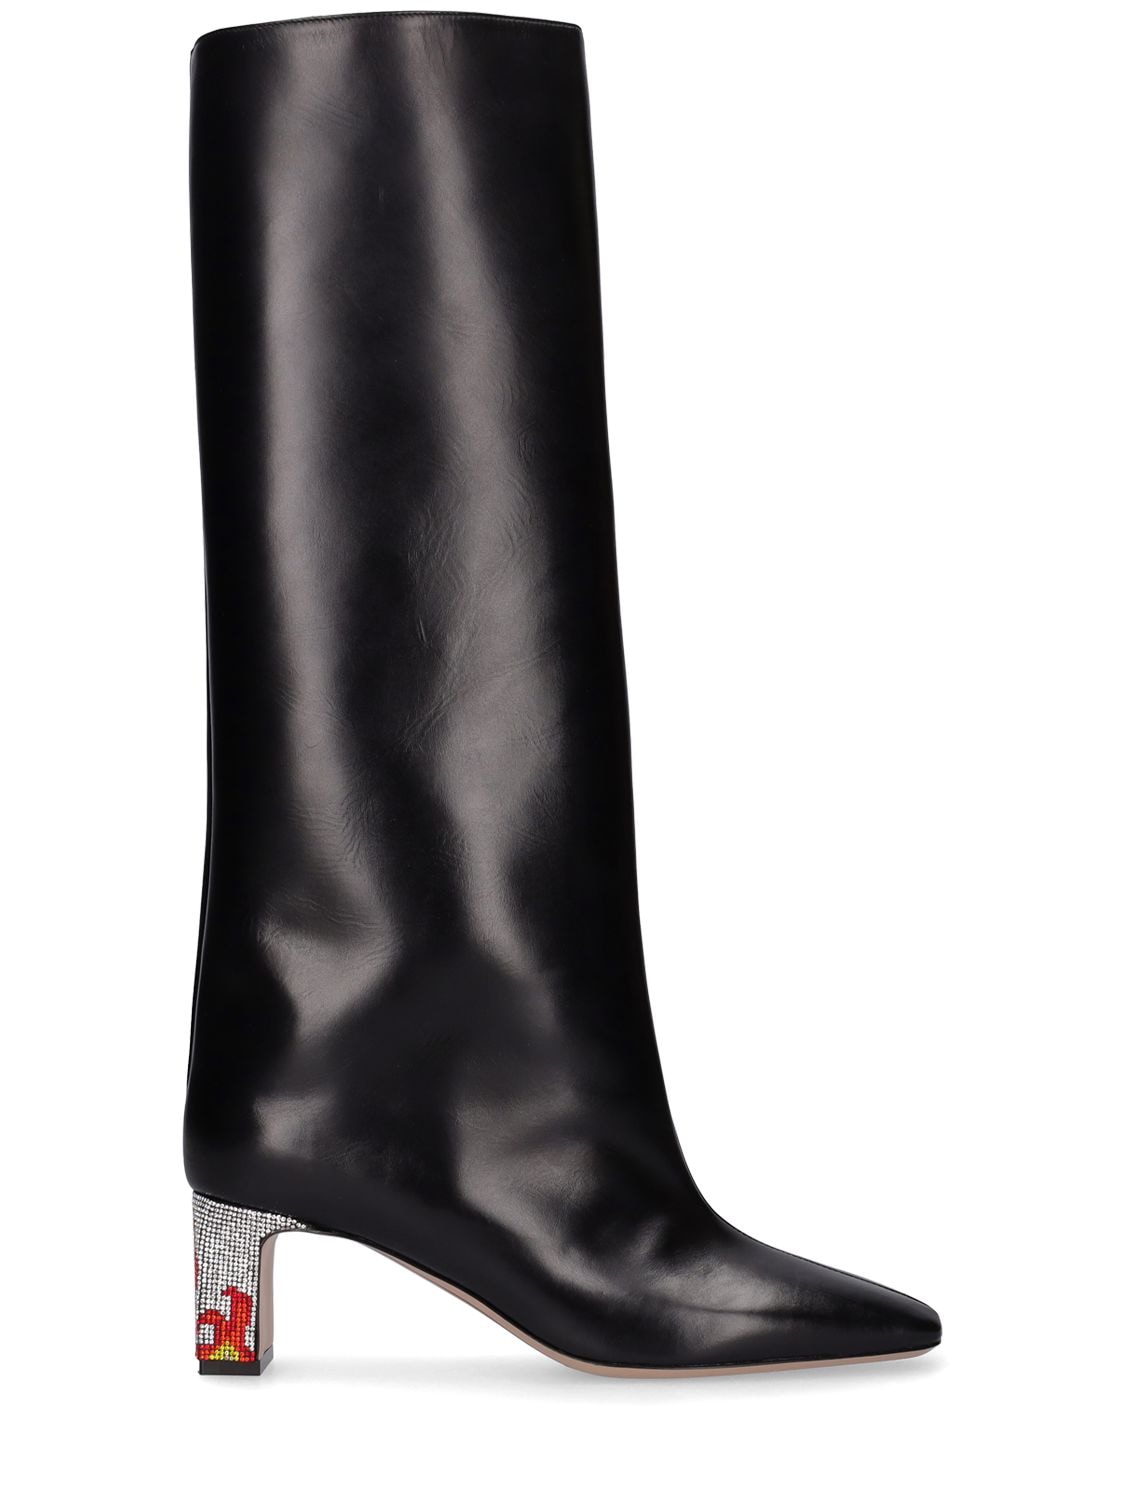 IINDACO 60mm Febo Leather Tall Boots